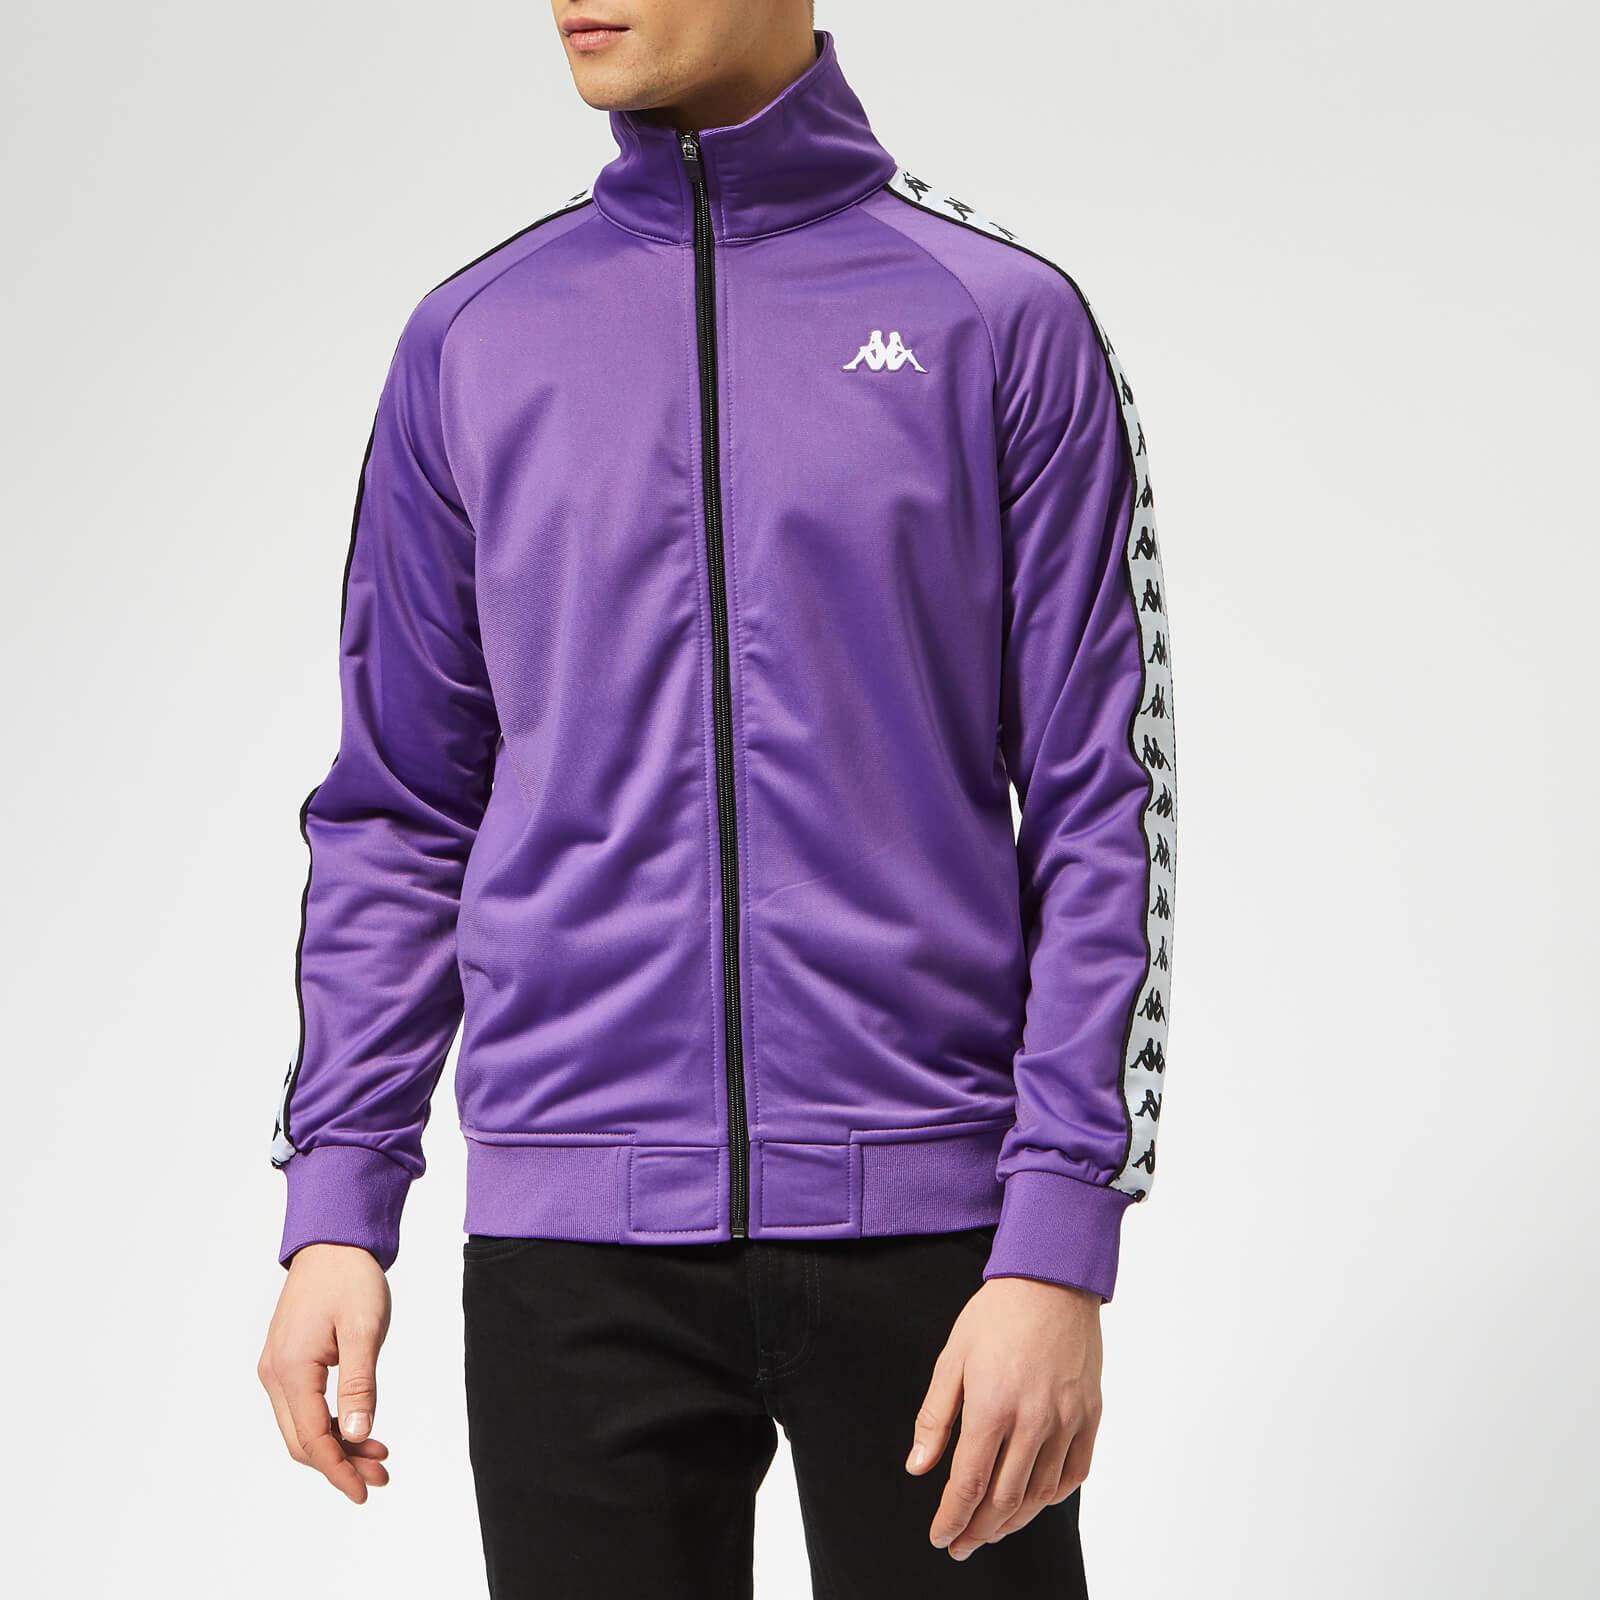 Kappa Synthetic Banda Anniston Track Jacket in Purple for Men - Lyst